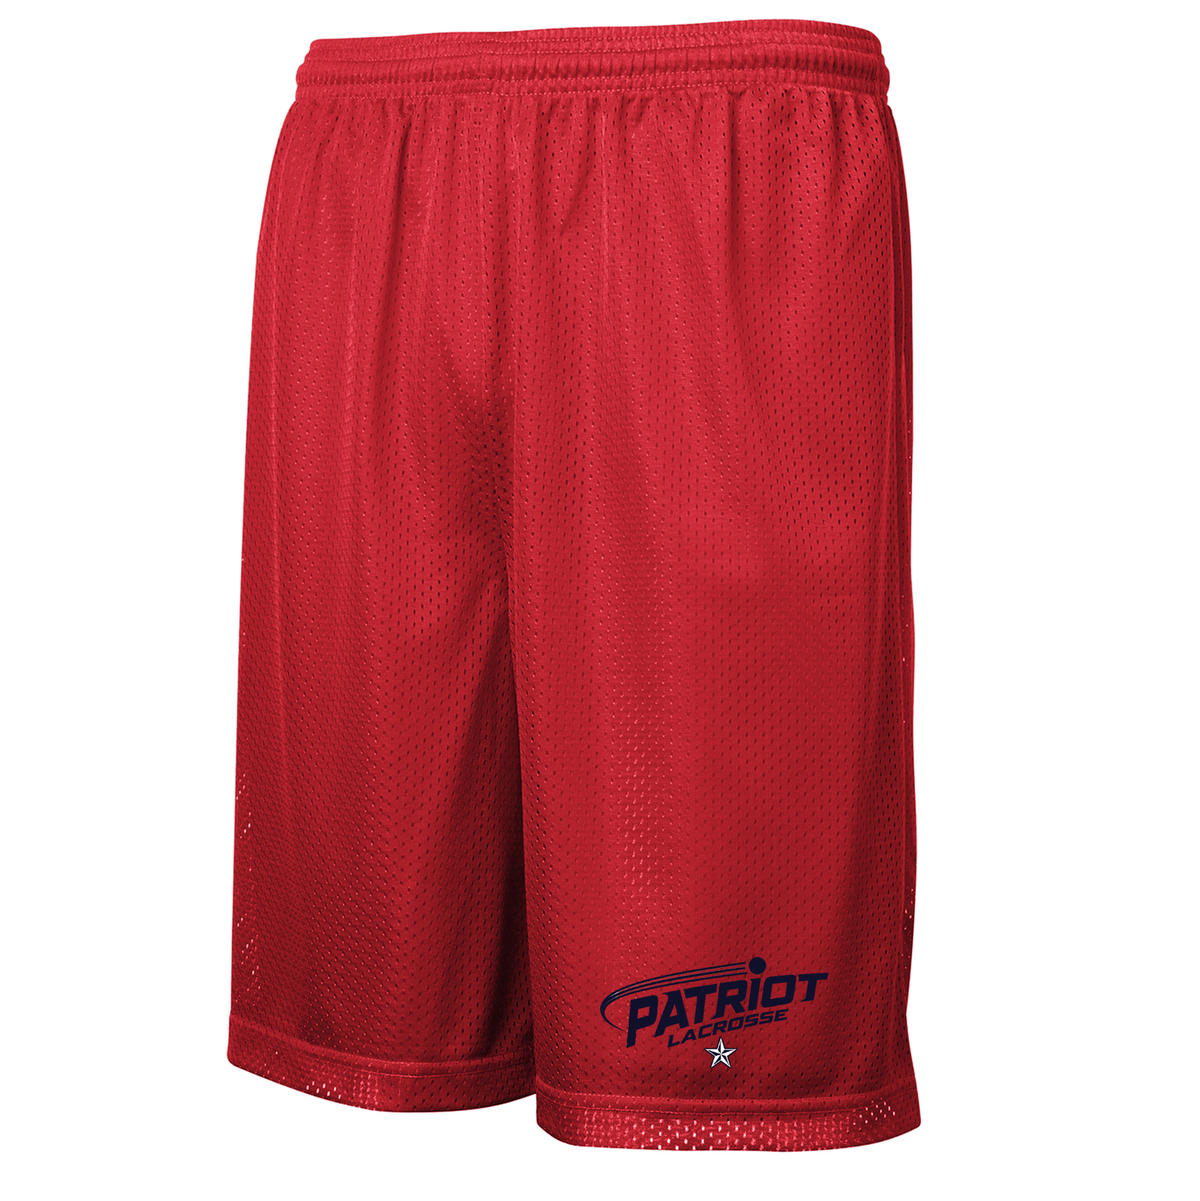 Patriot Lacrosse Classic Mesh Shorts